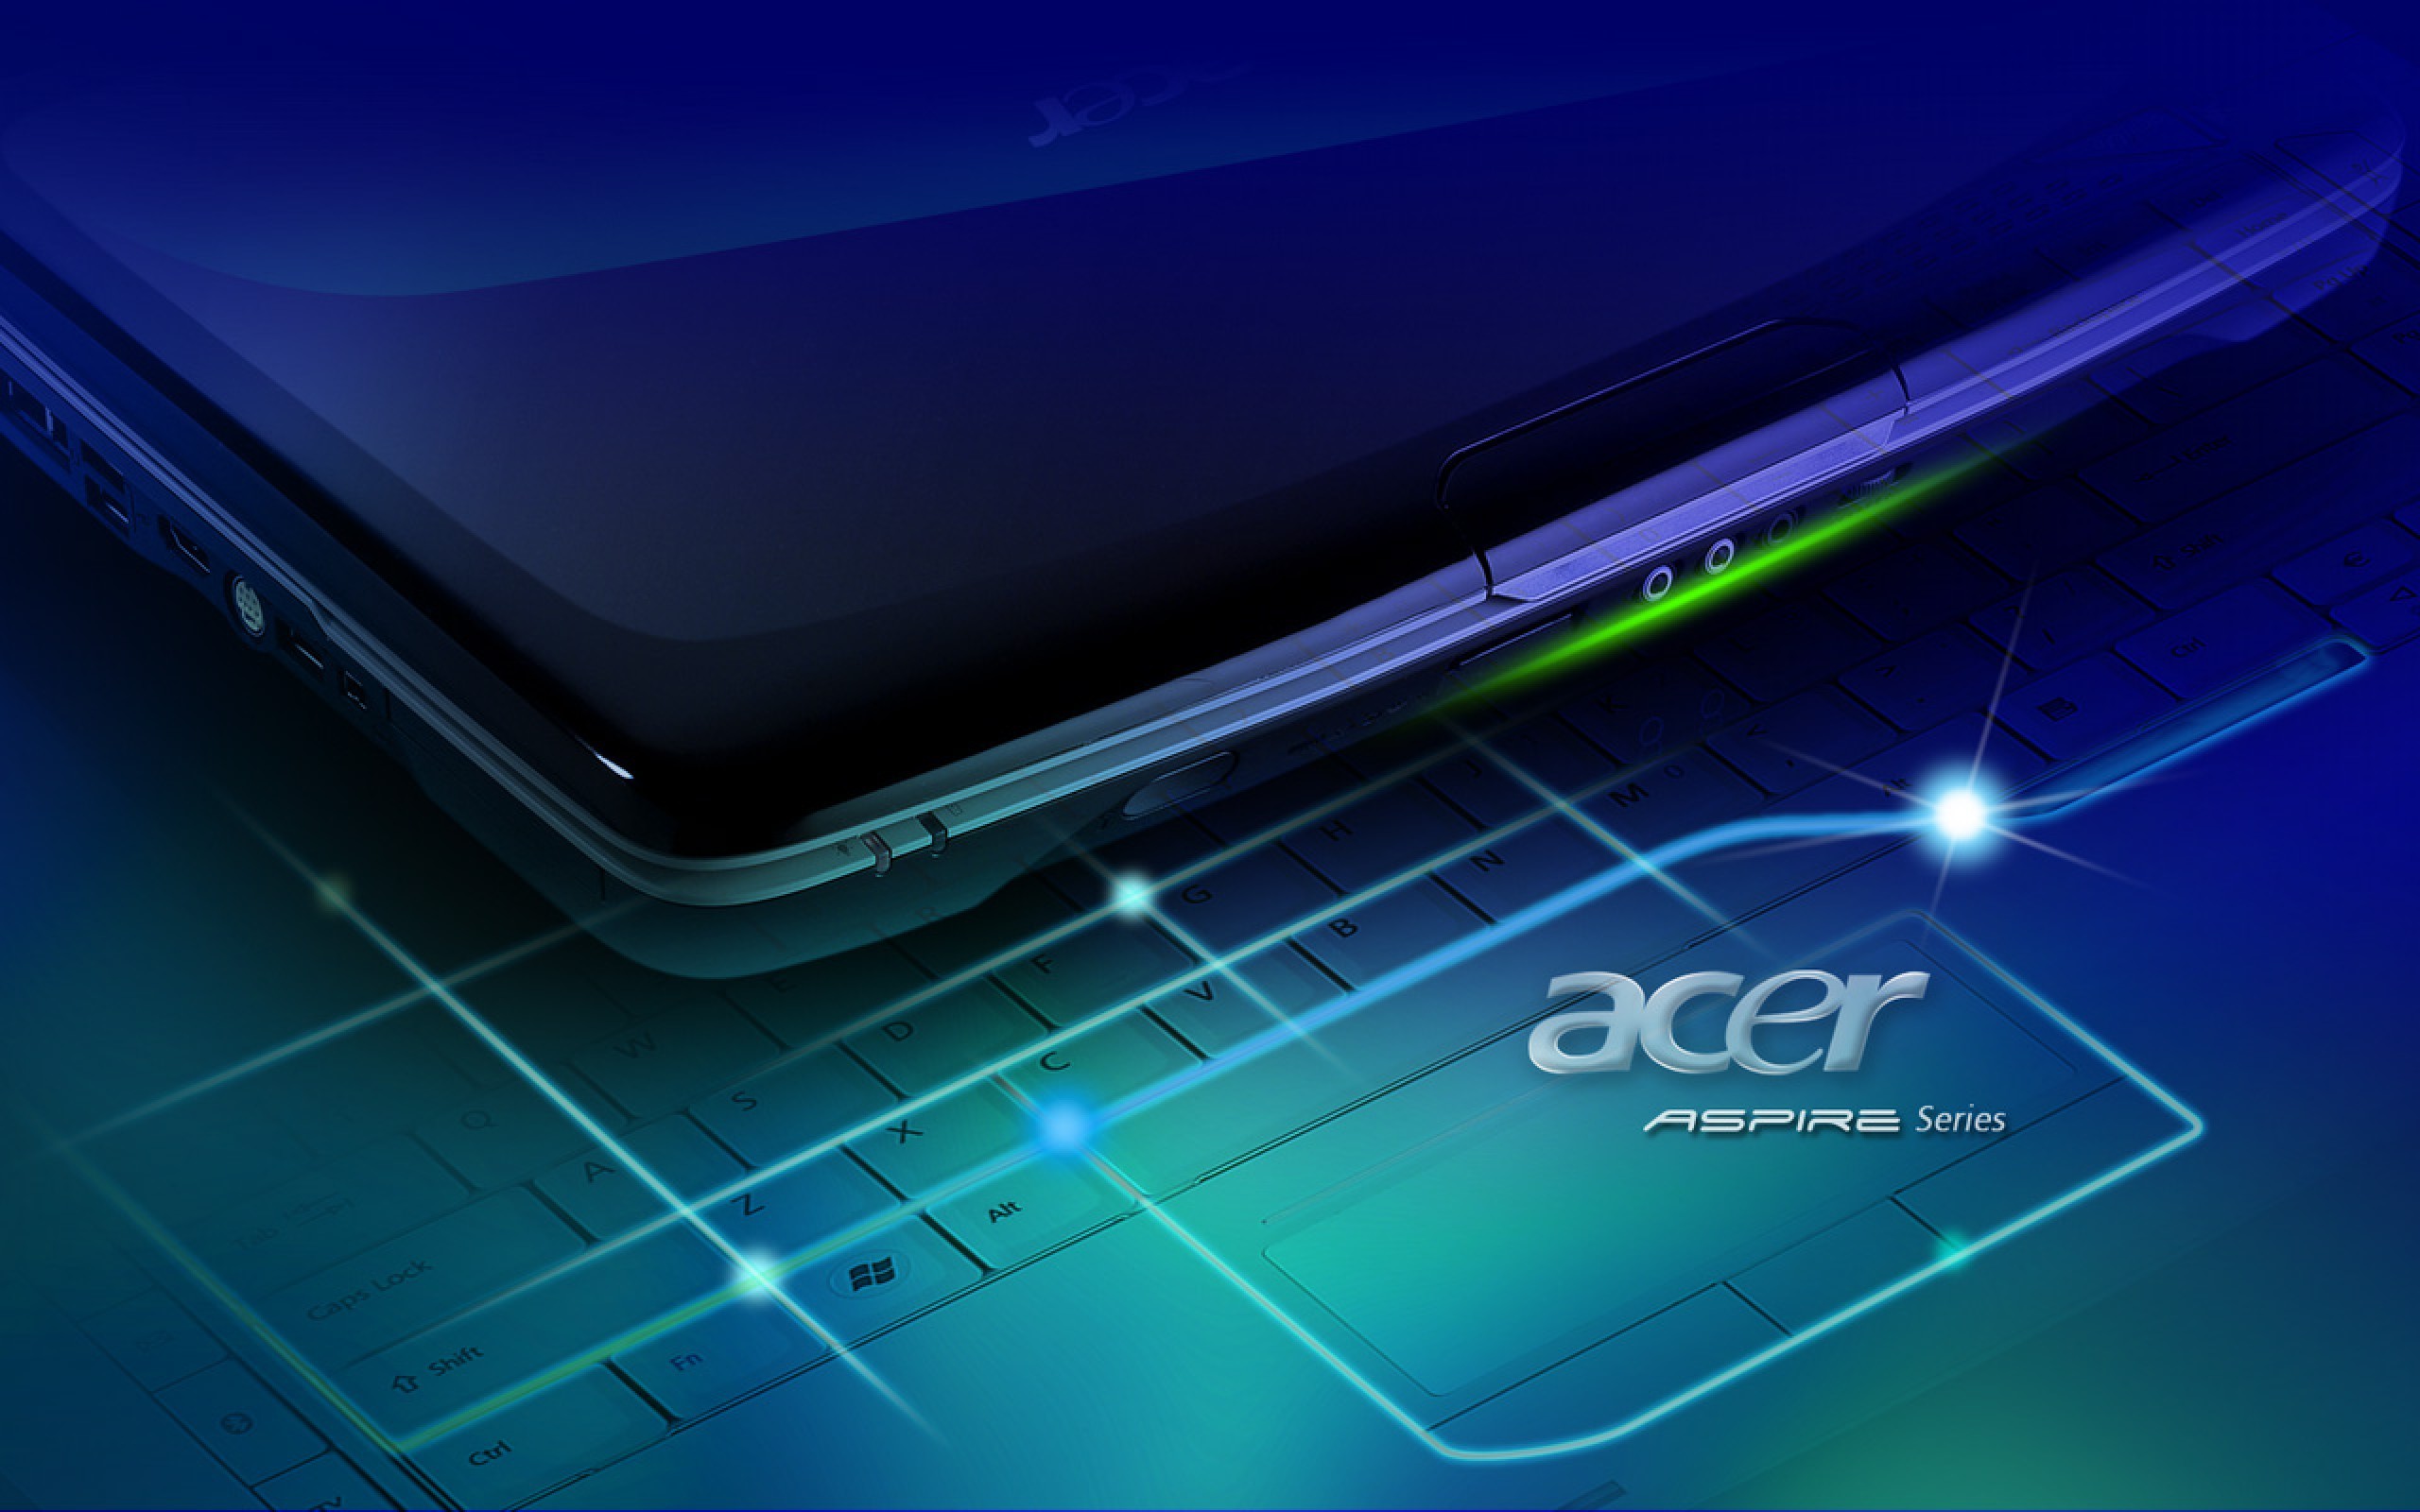 2560x1600 ... Acer aspire series wallpaper | Wallpaper Wide HD ...